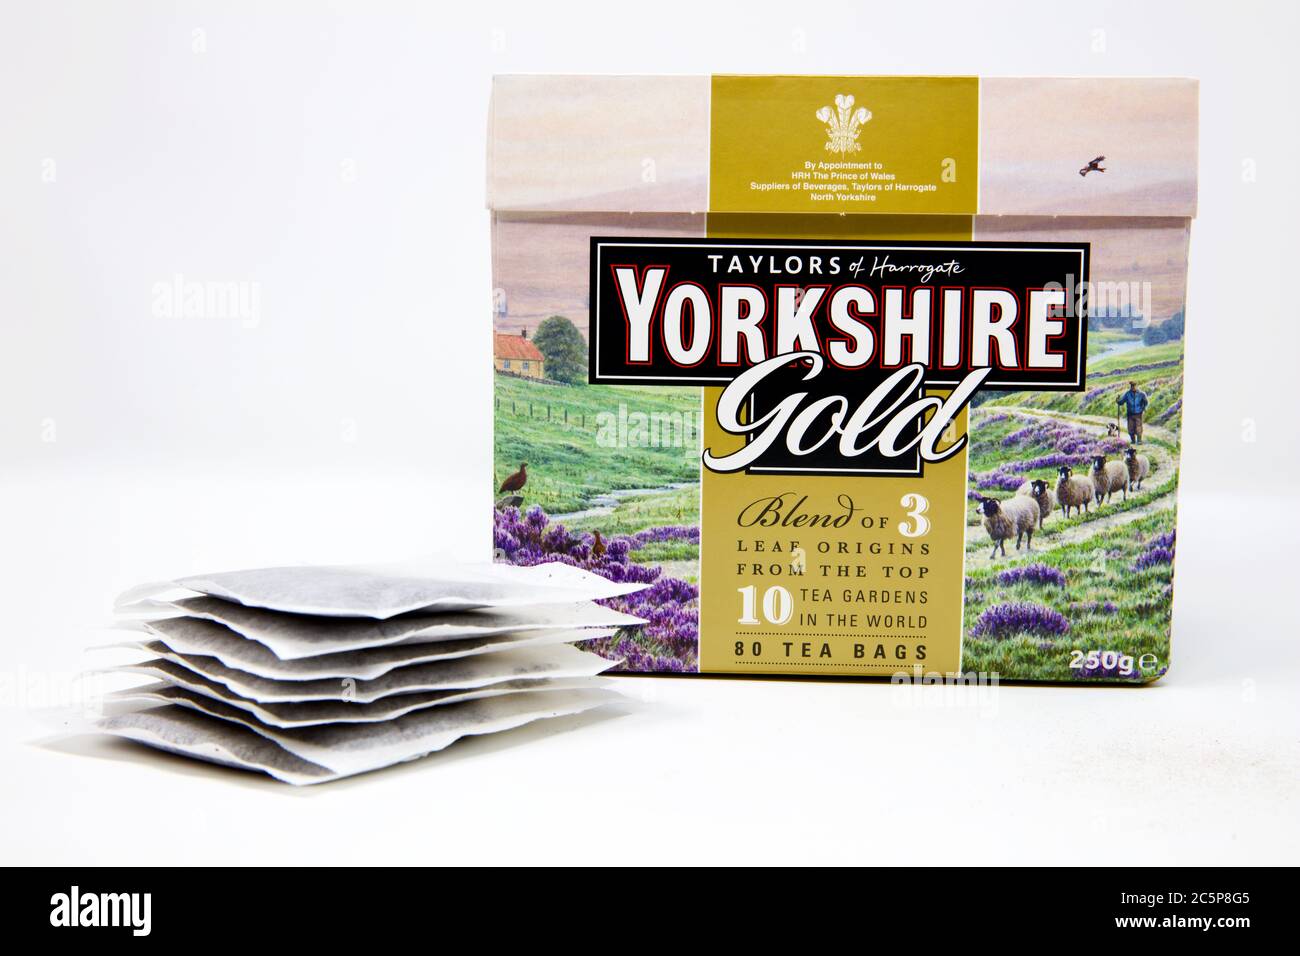 Taylors of Harrogate Yorkshire Gold Tea. 80 Bags